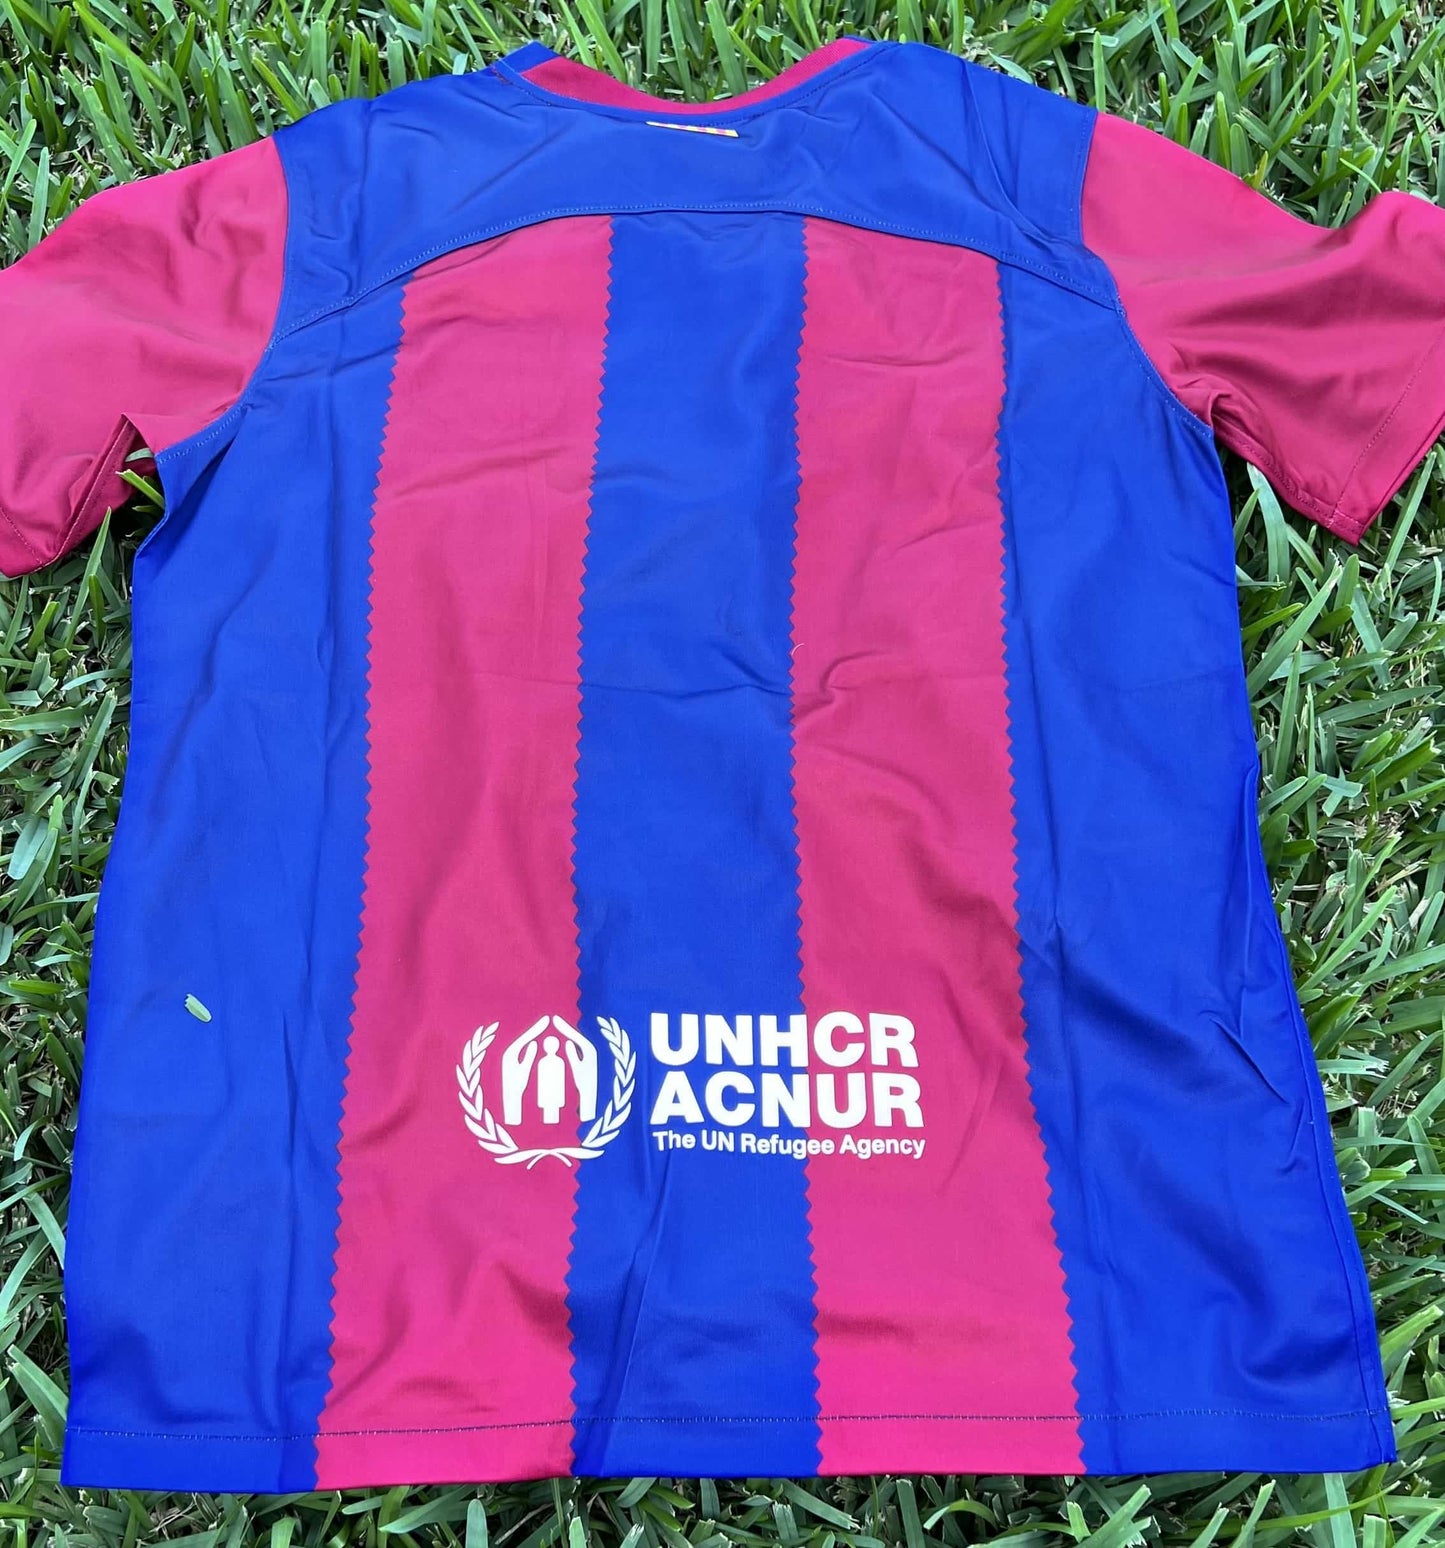 Fc Barcelona Home kit 23/24 Club Soccer Jersey